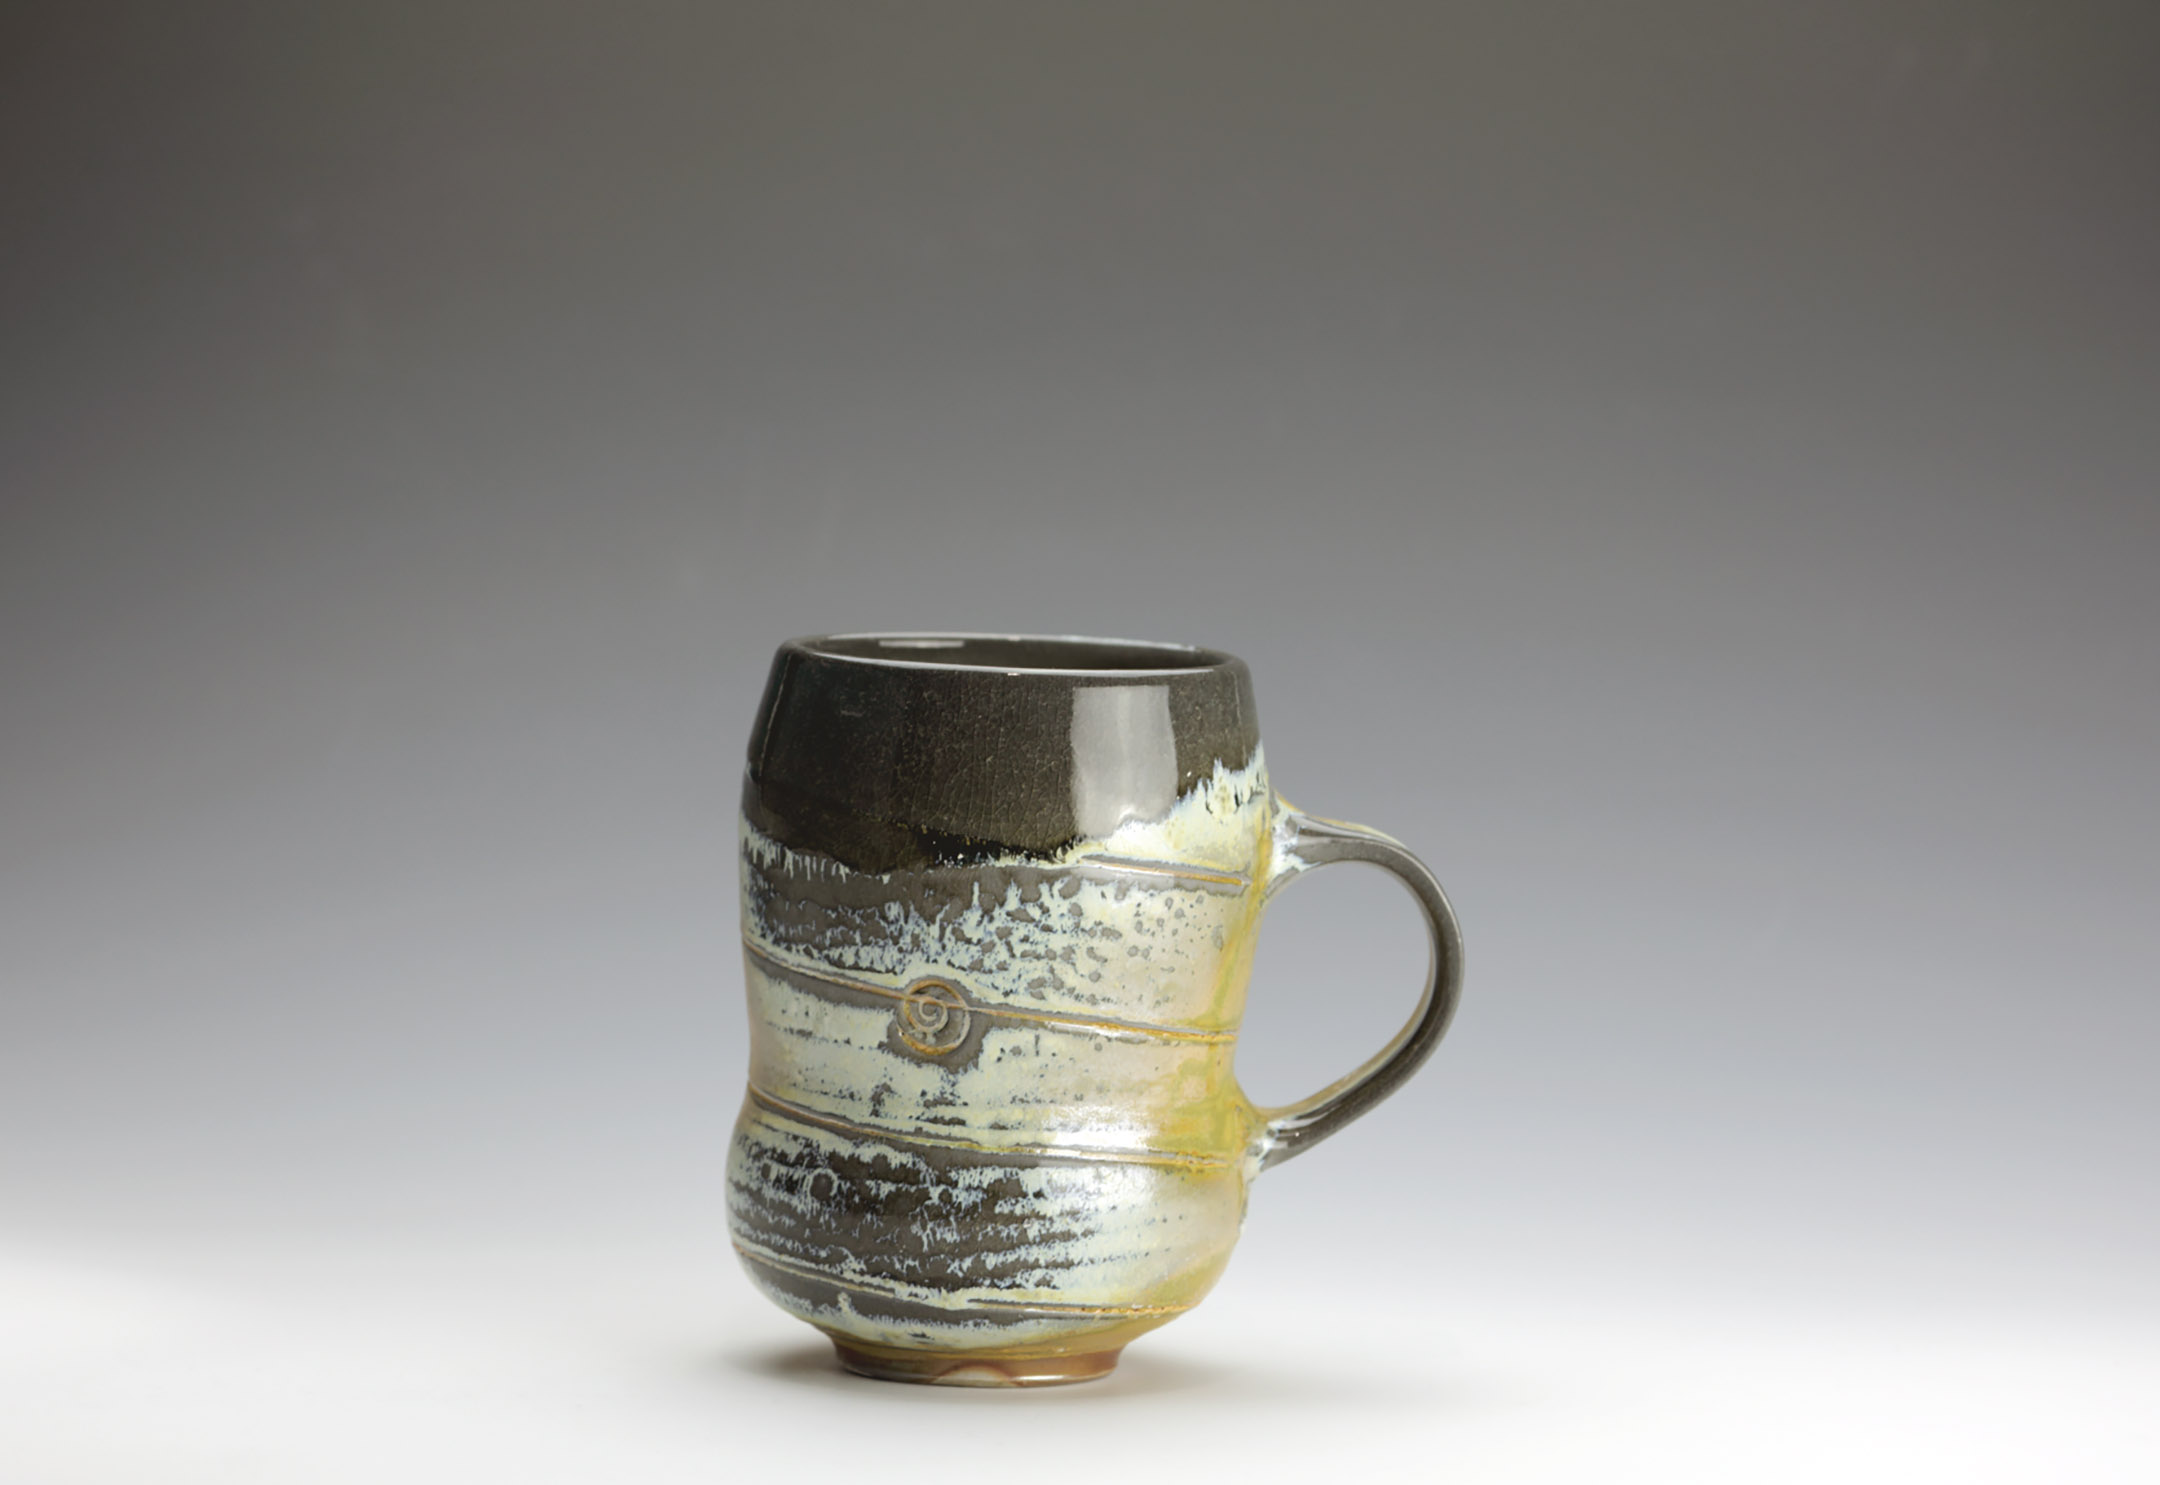 Soda fired small Mug for drinking coffee, tea